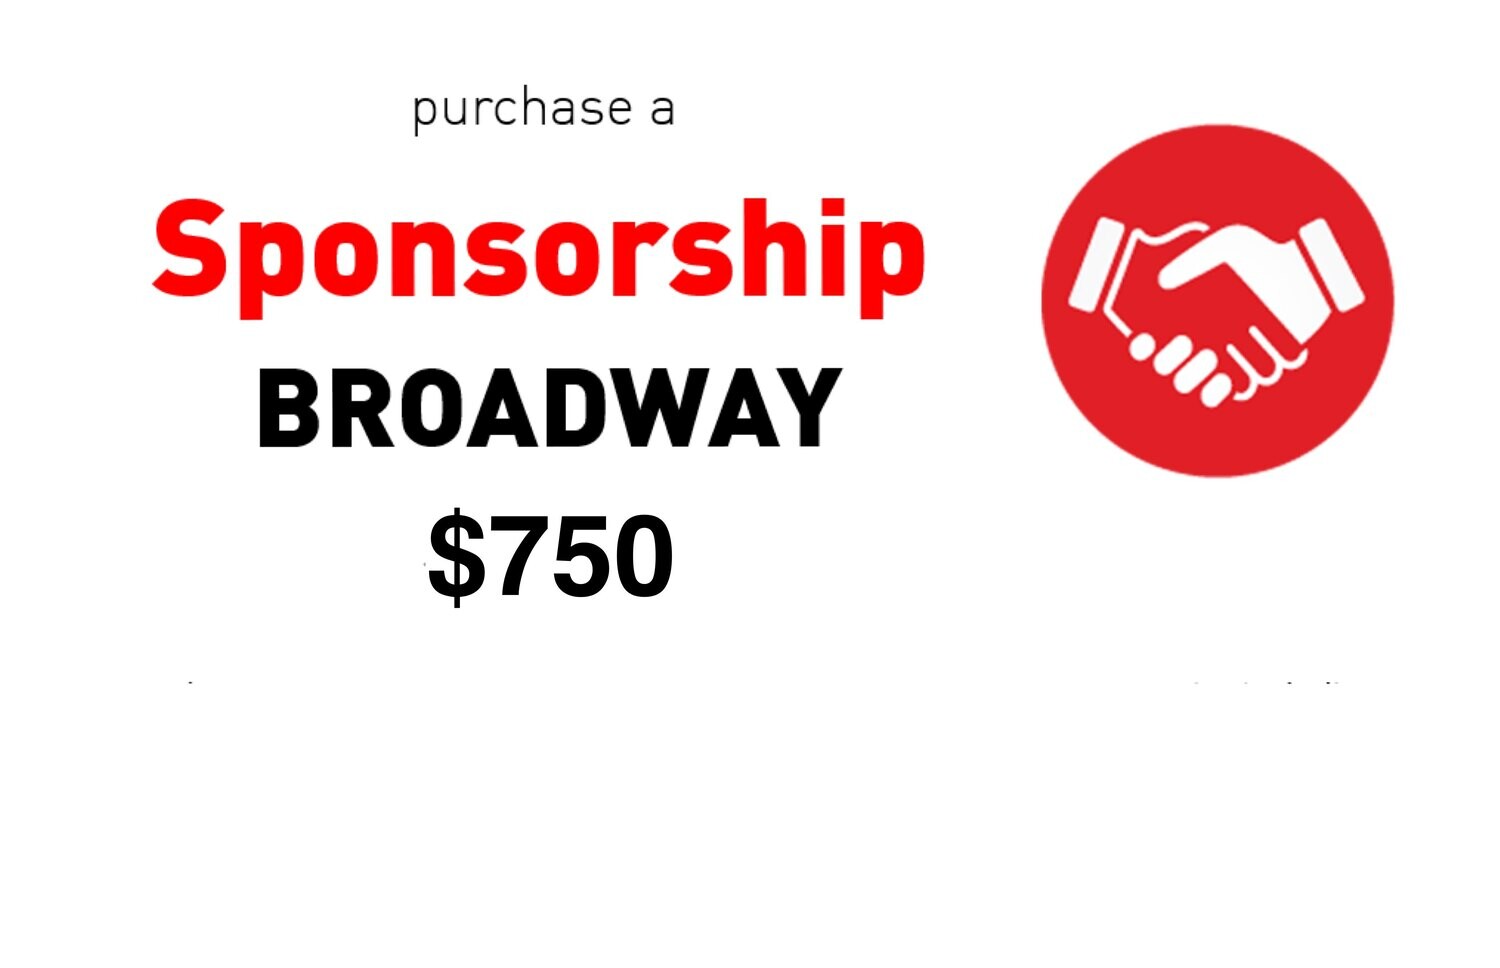 Sponsorship Level 2 - Broadway